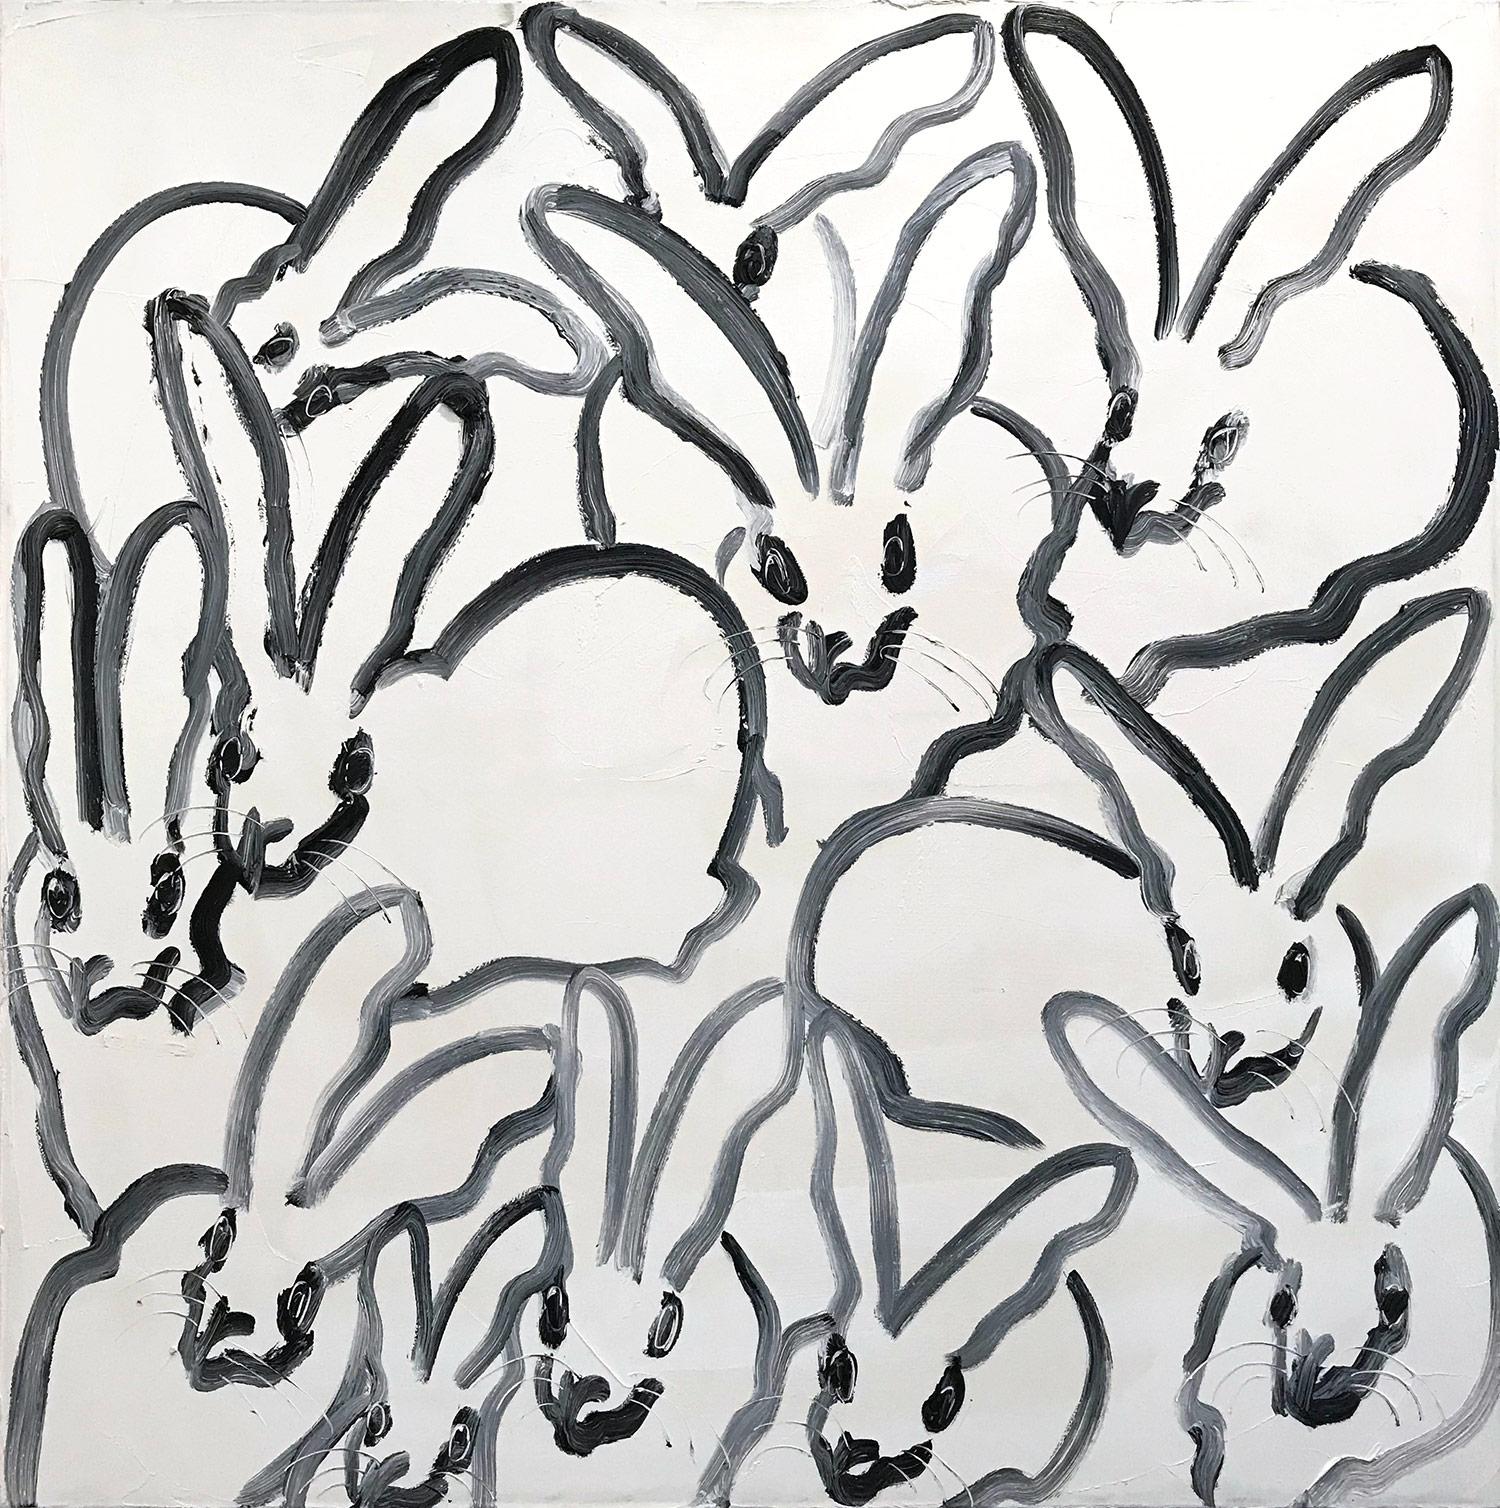 bunny abstract art